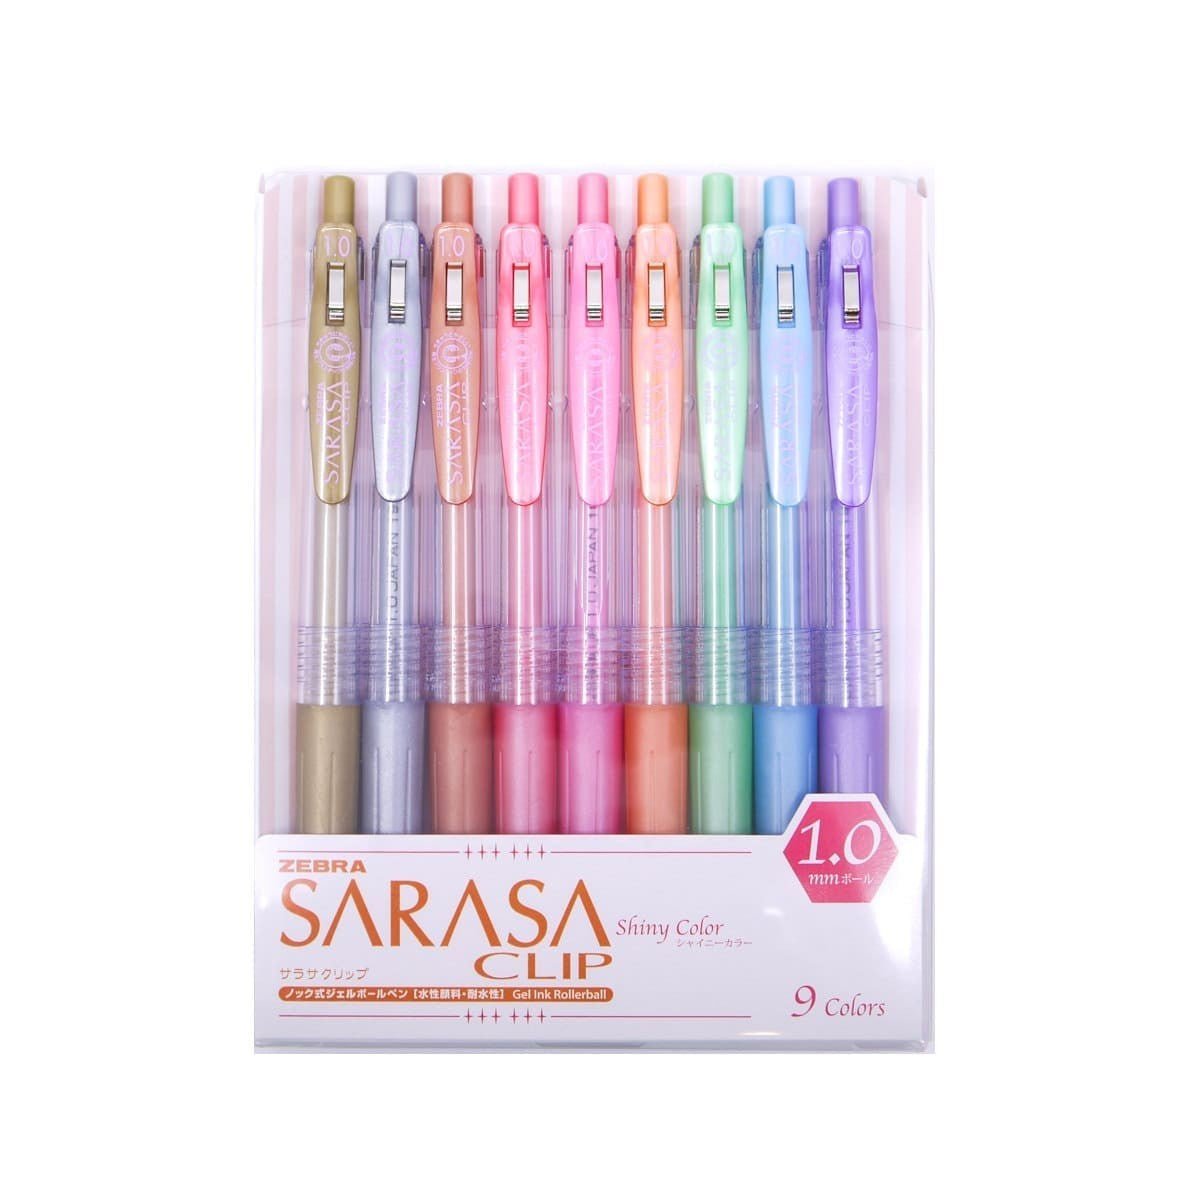 Sarasa Clip Gelpenna Shiny Color 9-pack - Zebra - Tidformera